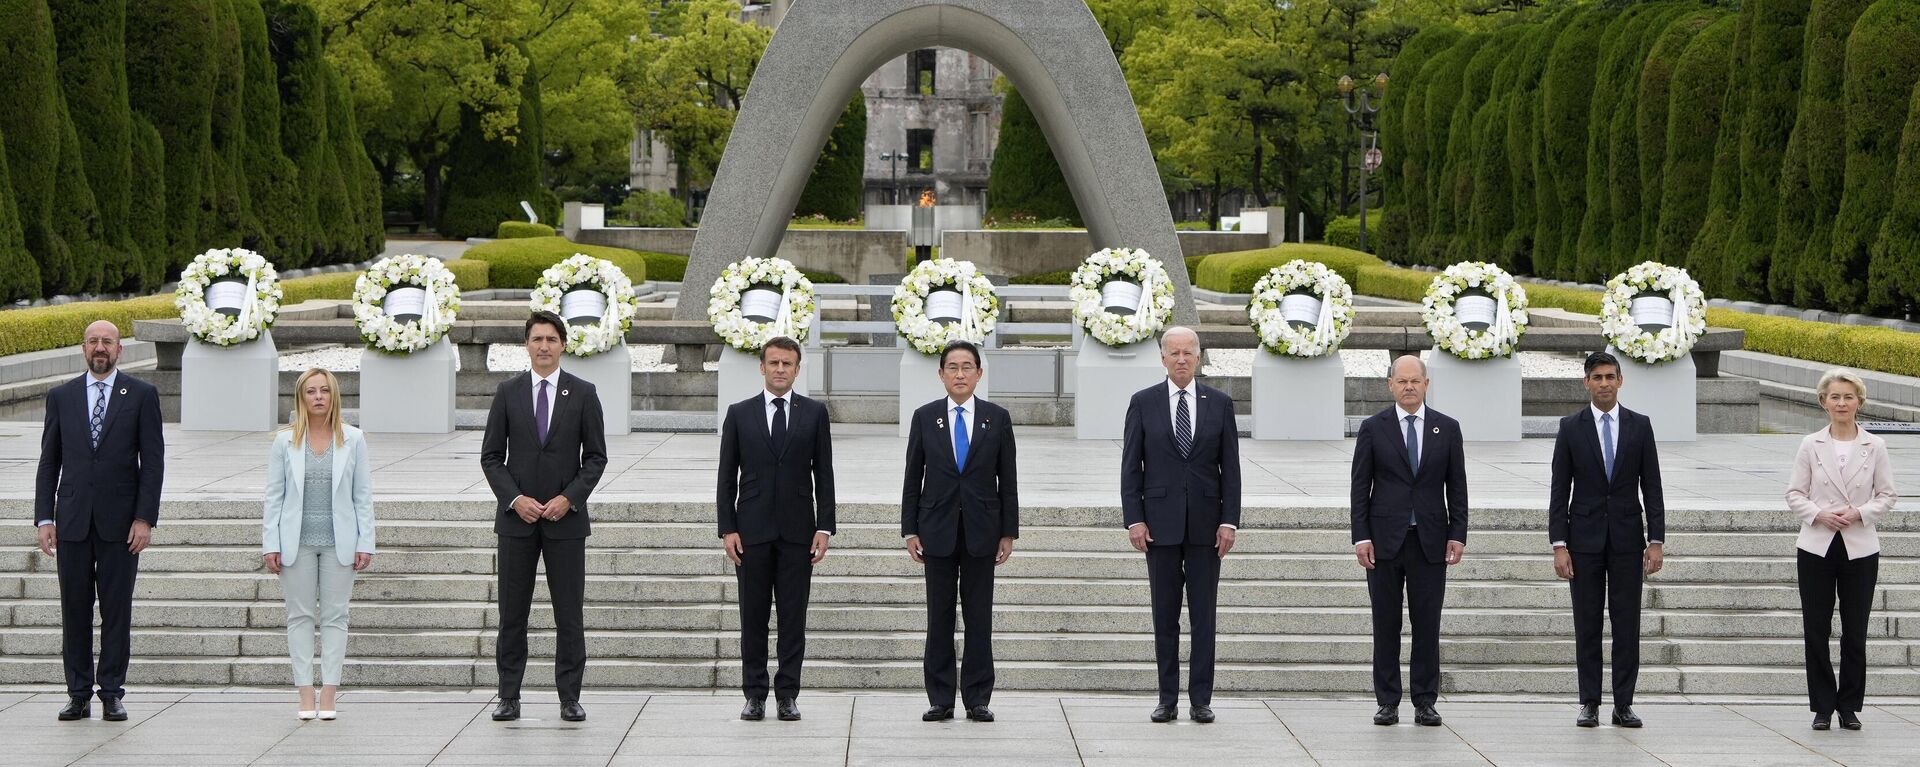 G7首脳が訪問する広島の原爆資料館 - Sputnik 日本, 1920, 22.05.2023